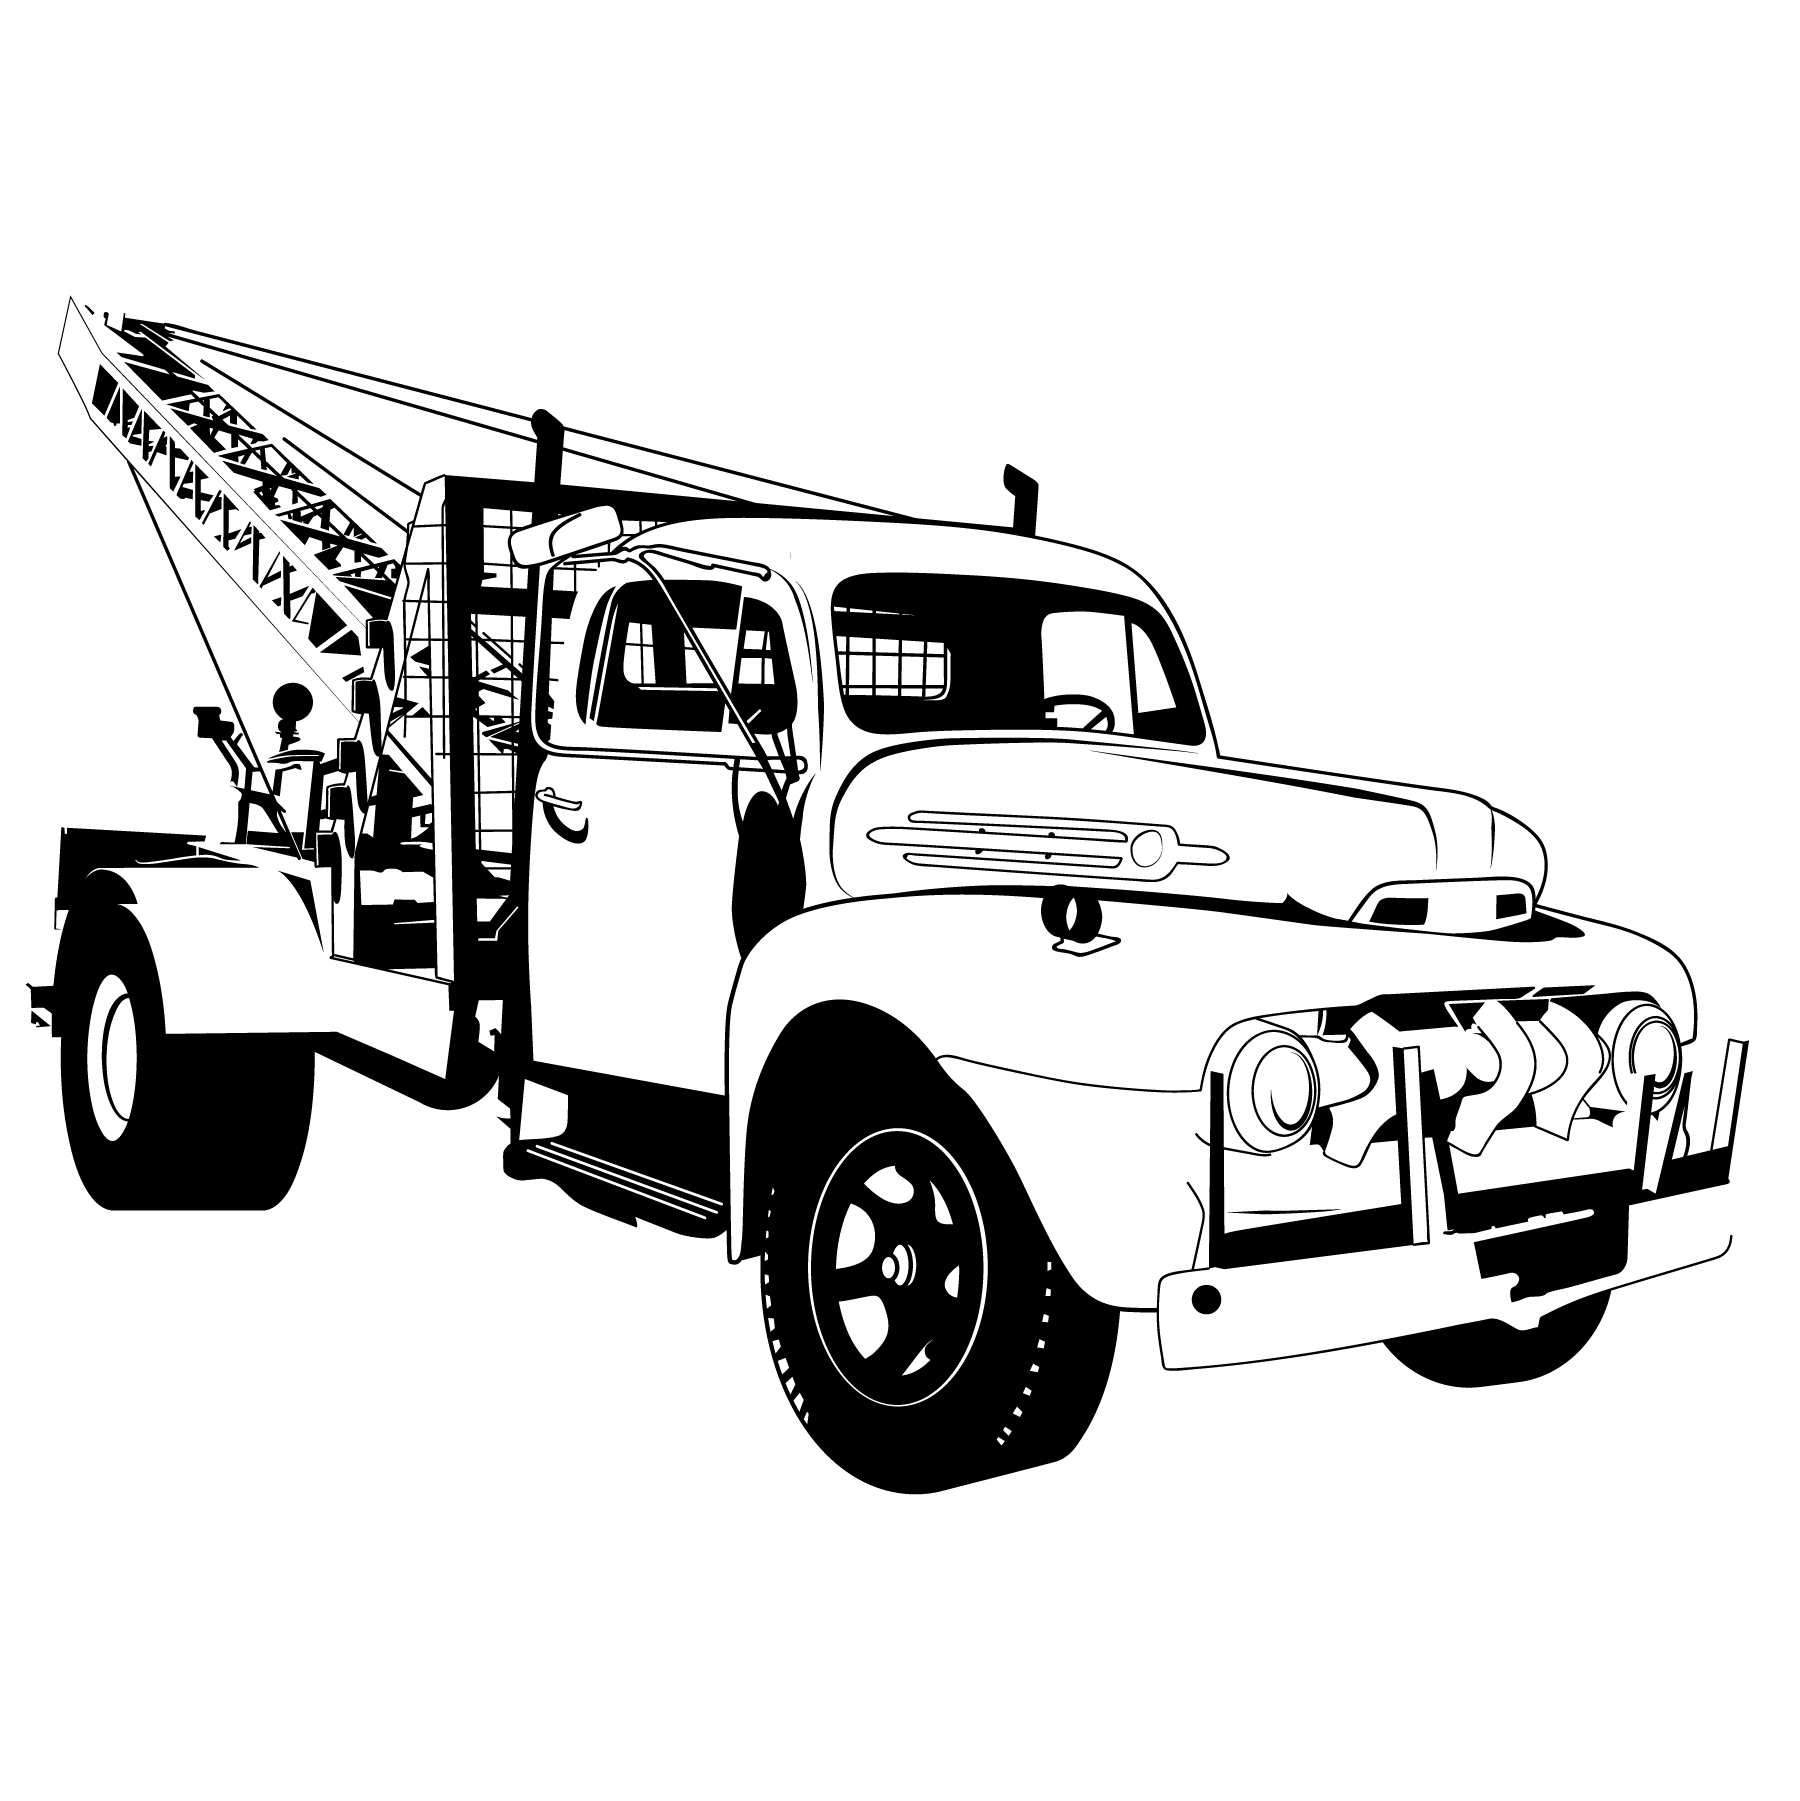 tow truck vector eps - Download Free Vectors, Clipart Graphics & Vector Art